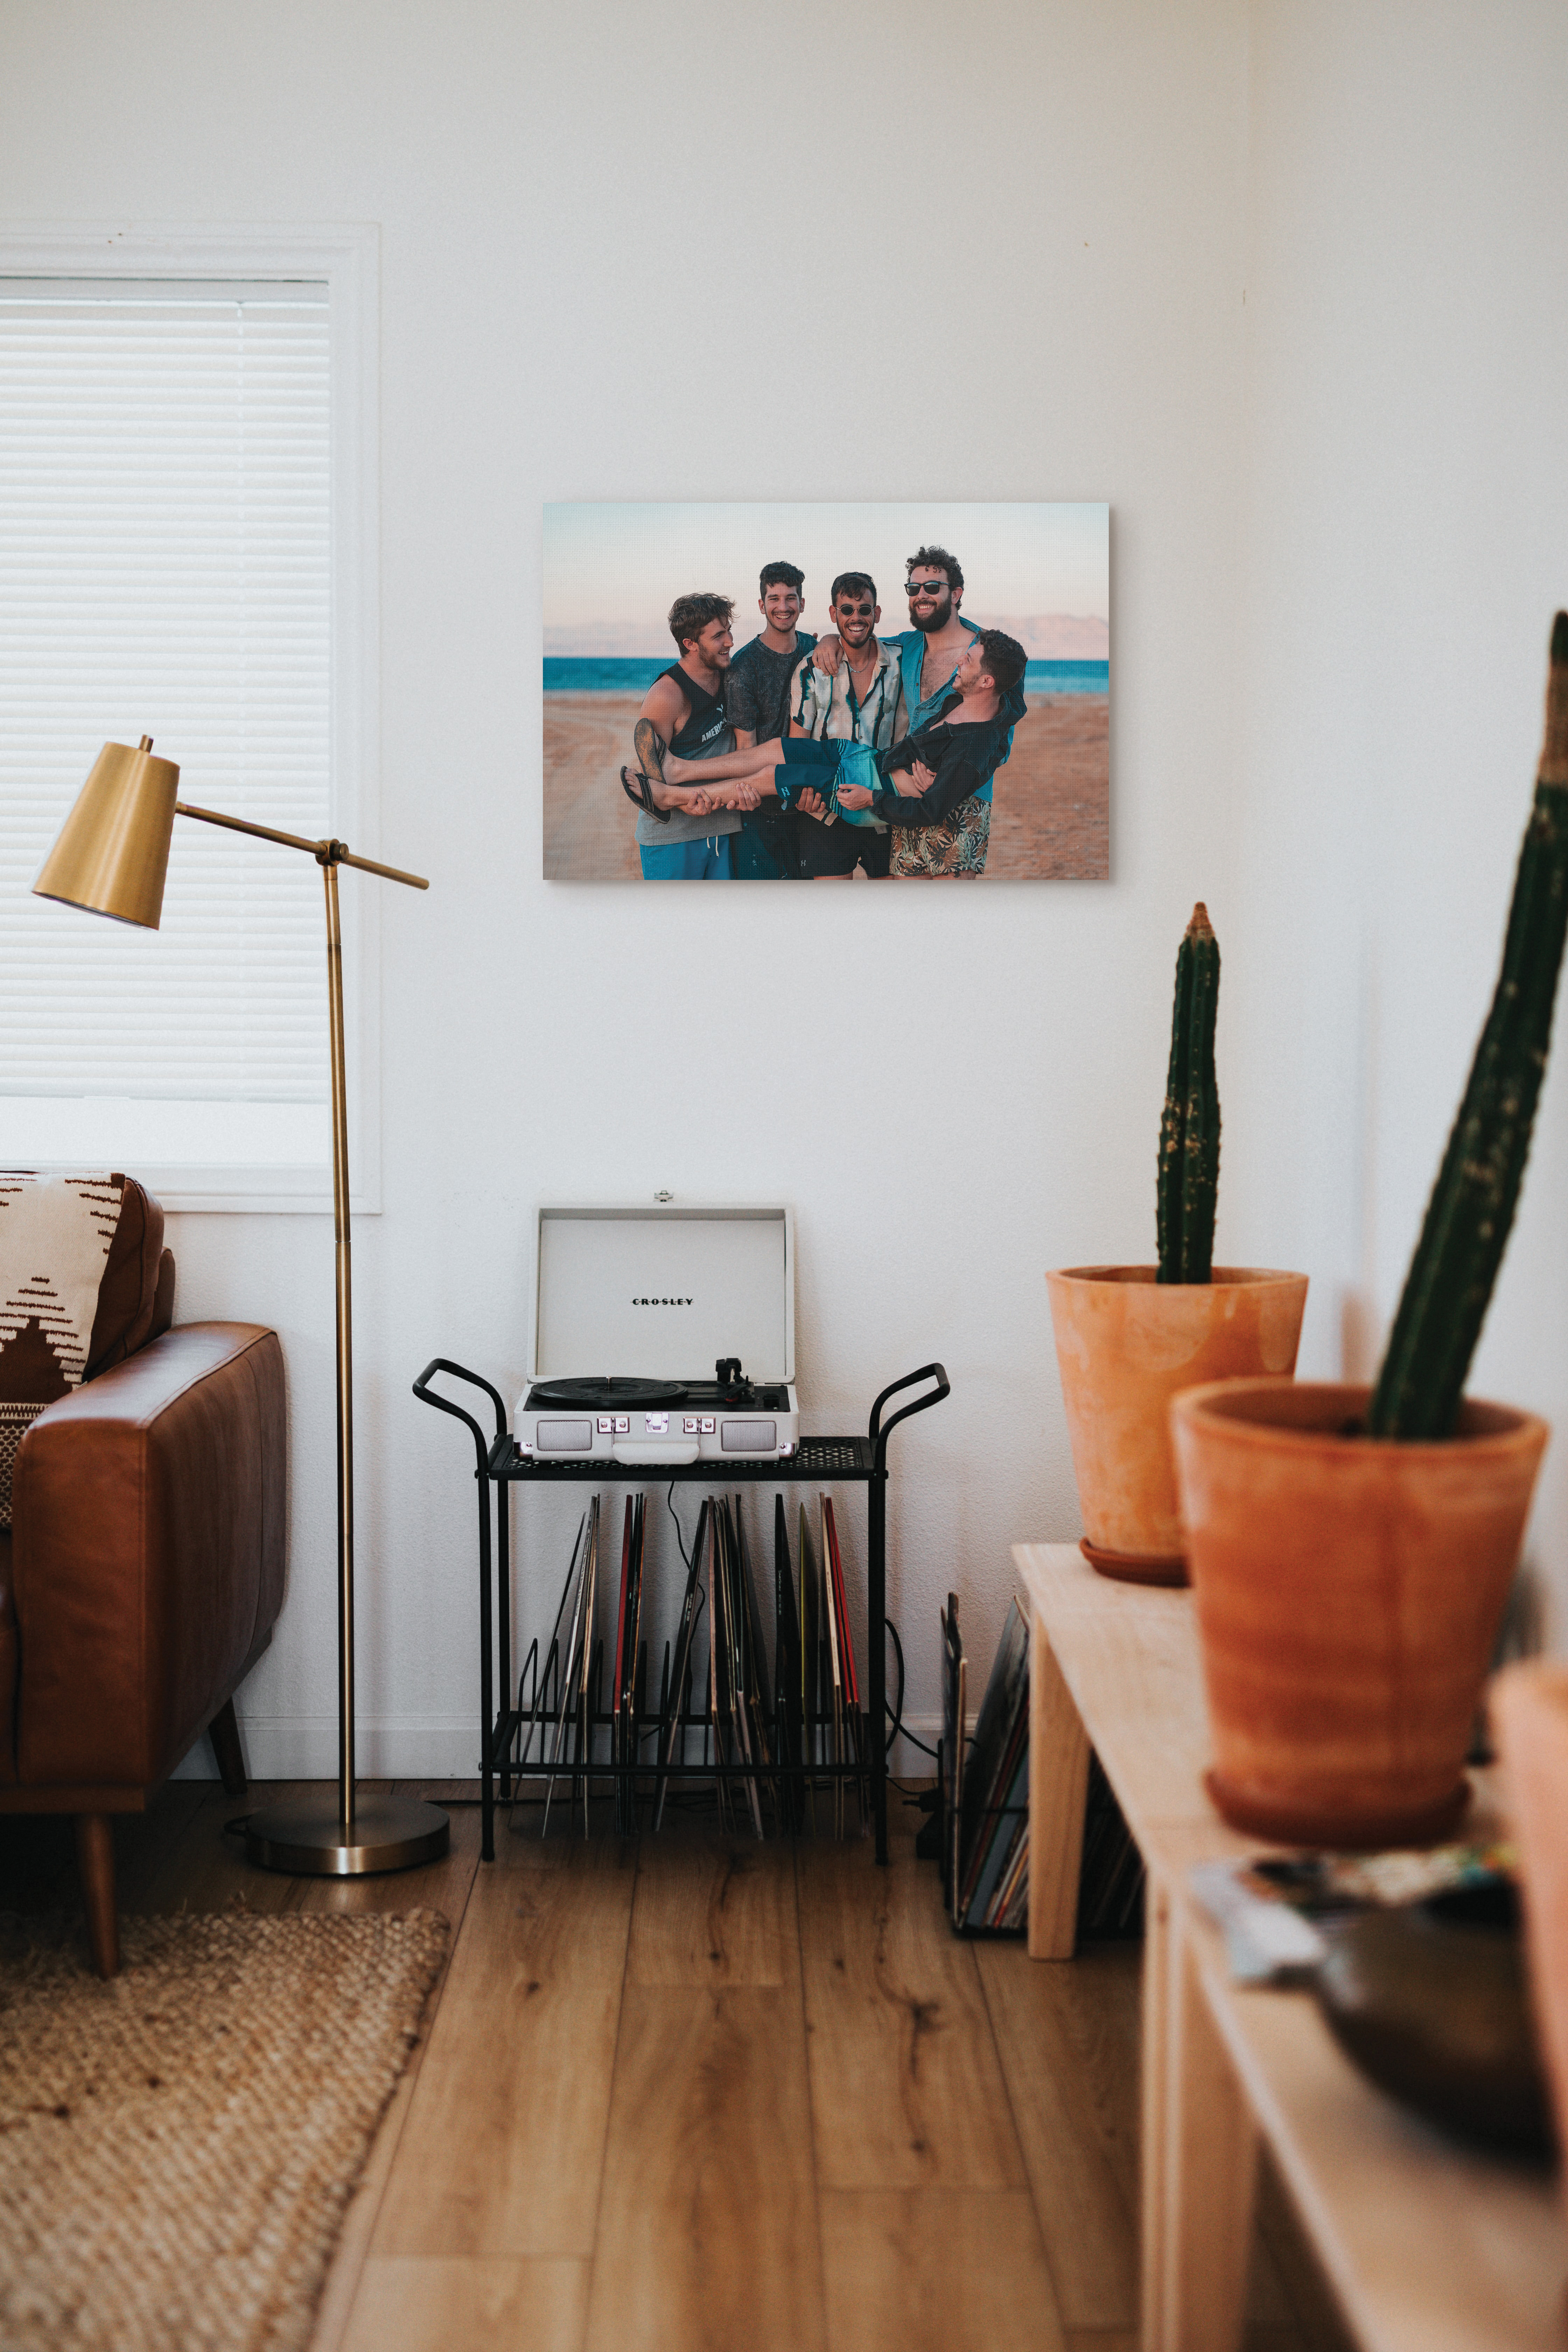 Framed print of friends in living room